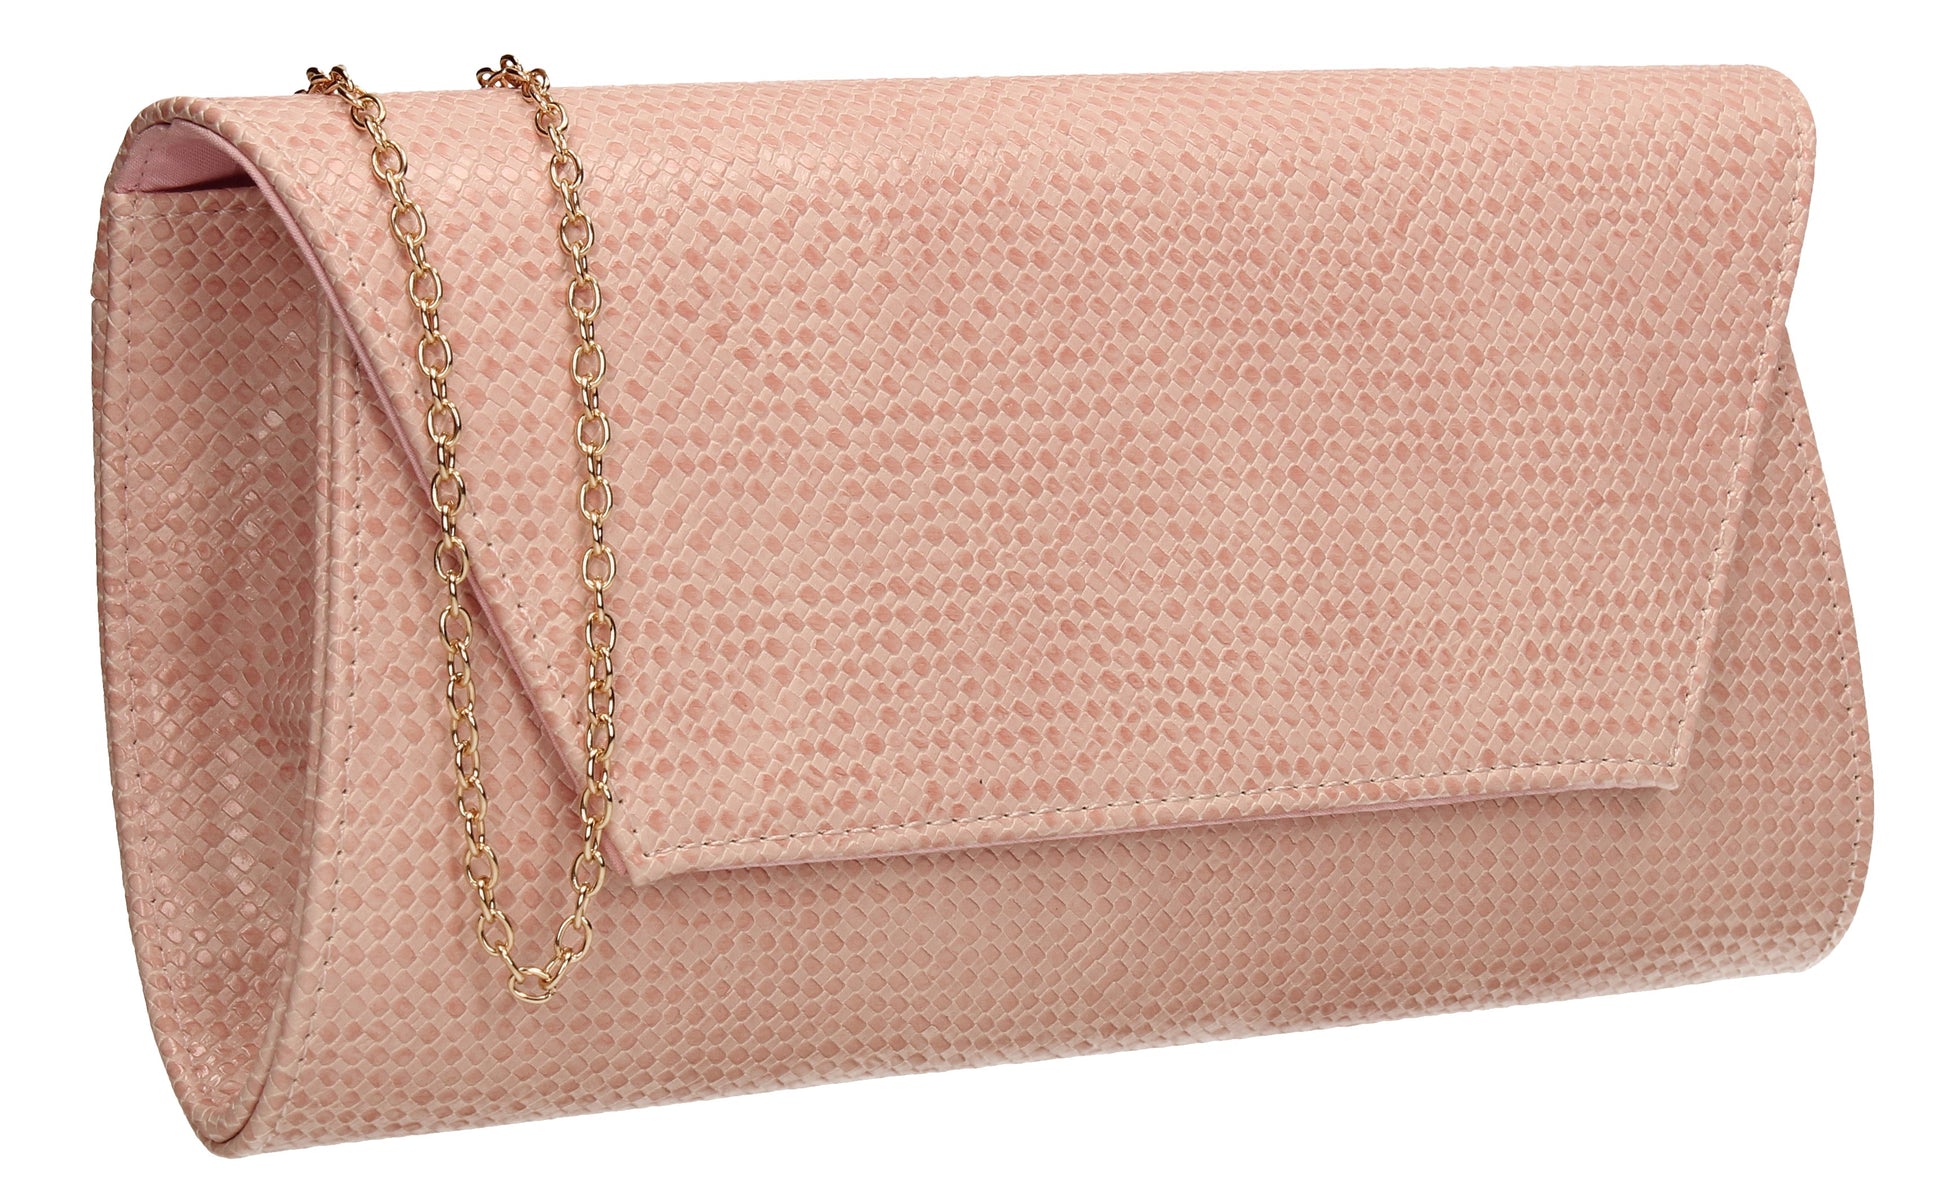 SWANKYSWANS Merci Micro Clutch Bag Pink Cute Cheap Clutch Bag For Weddings School and Work